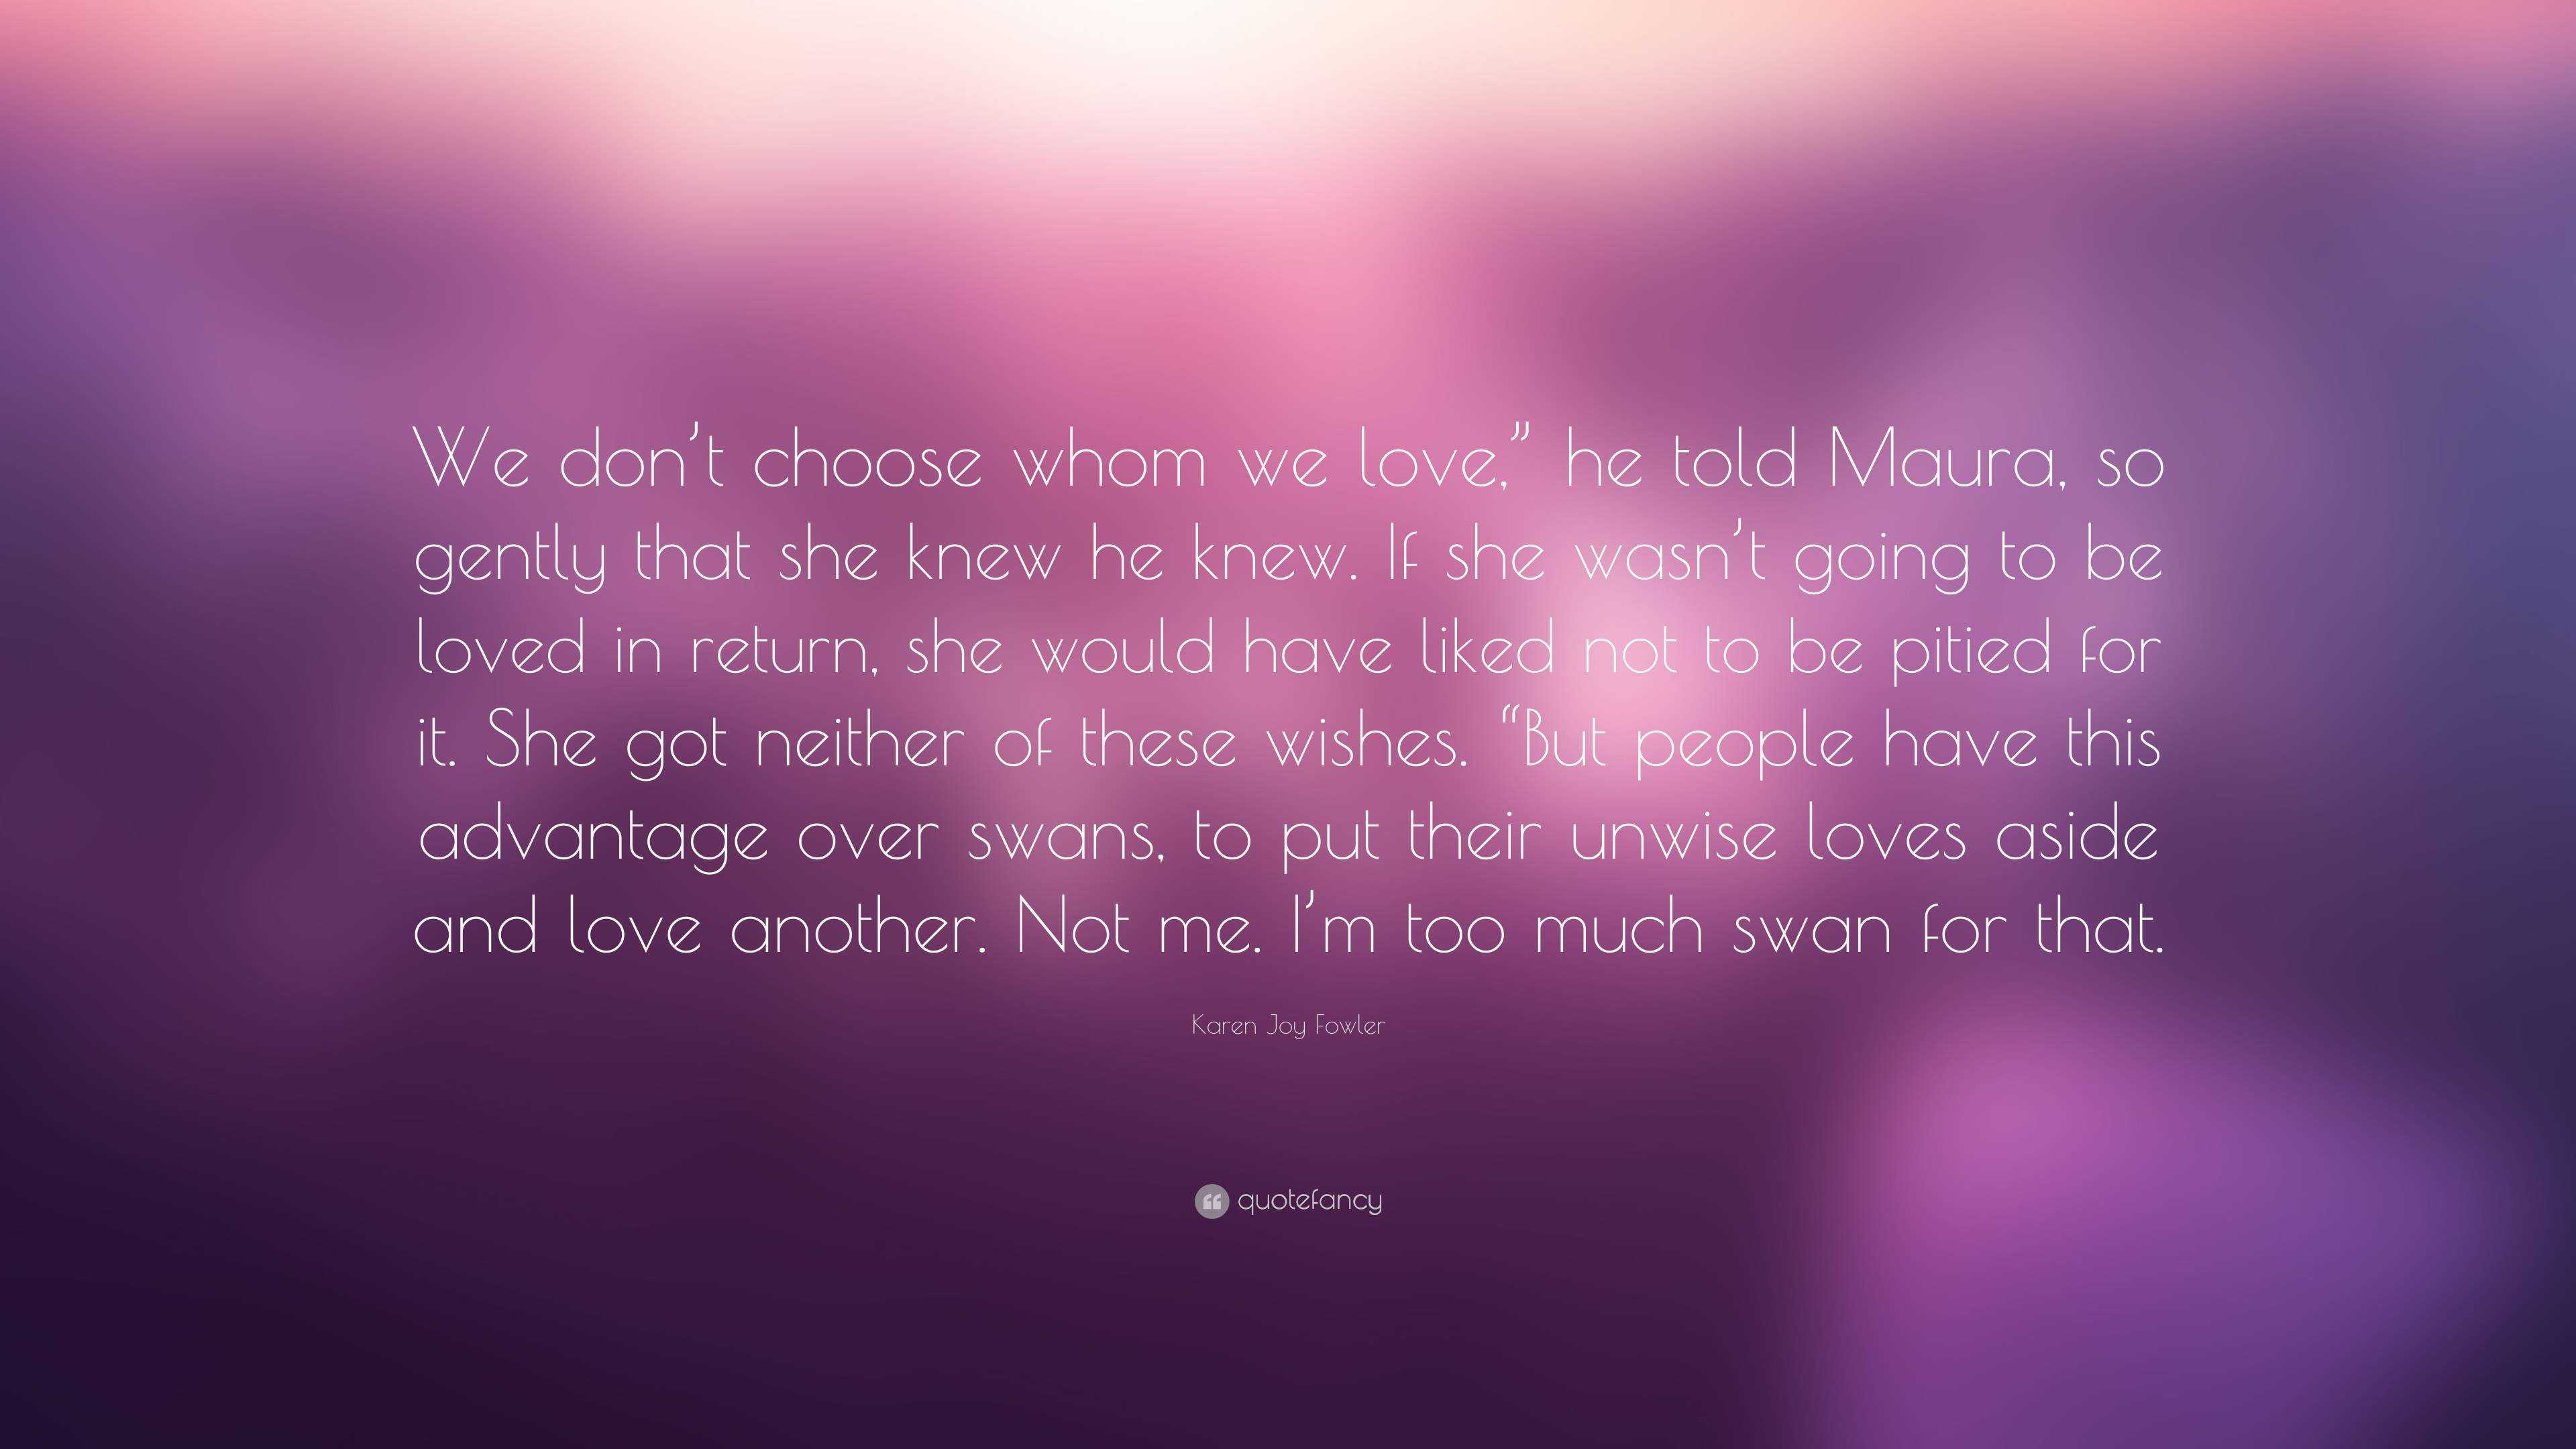 Karen Joy Fowler Quote: “We don’t choose whom we love,” he told Maura ...